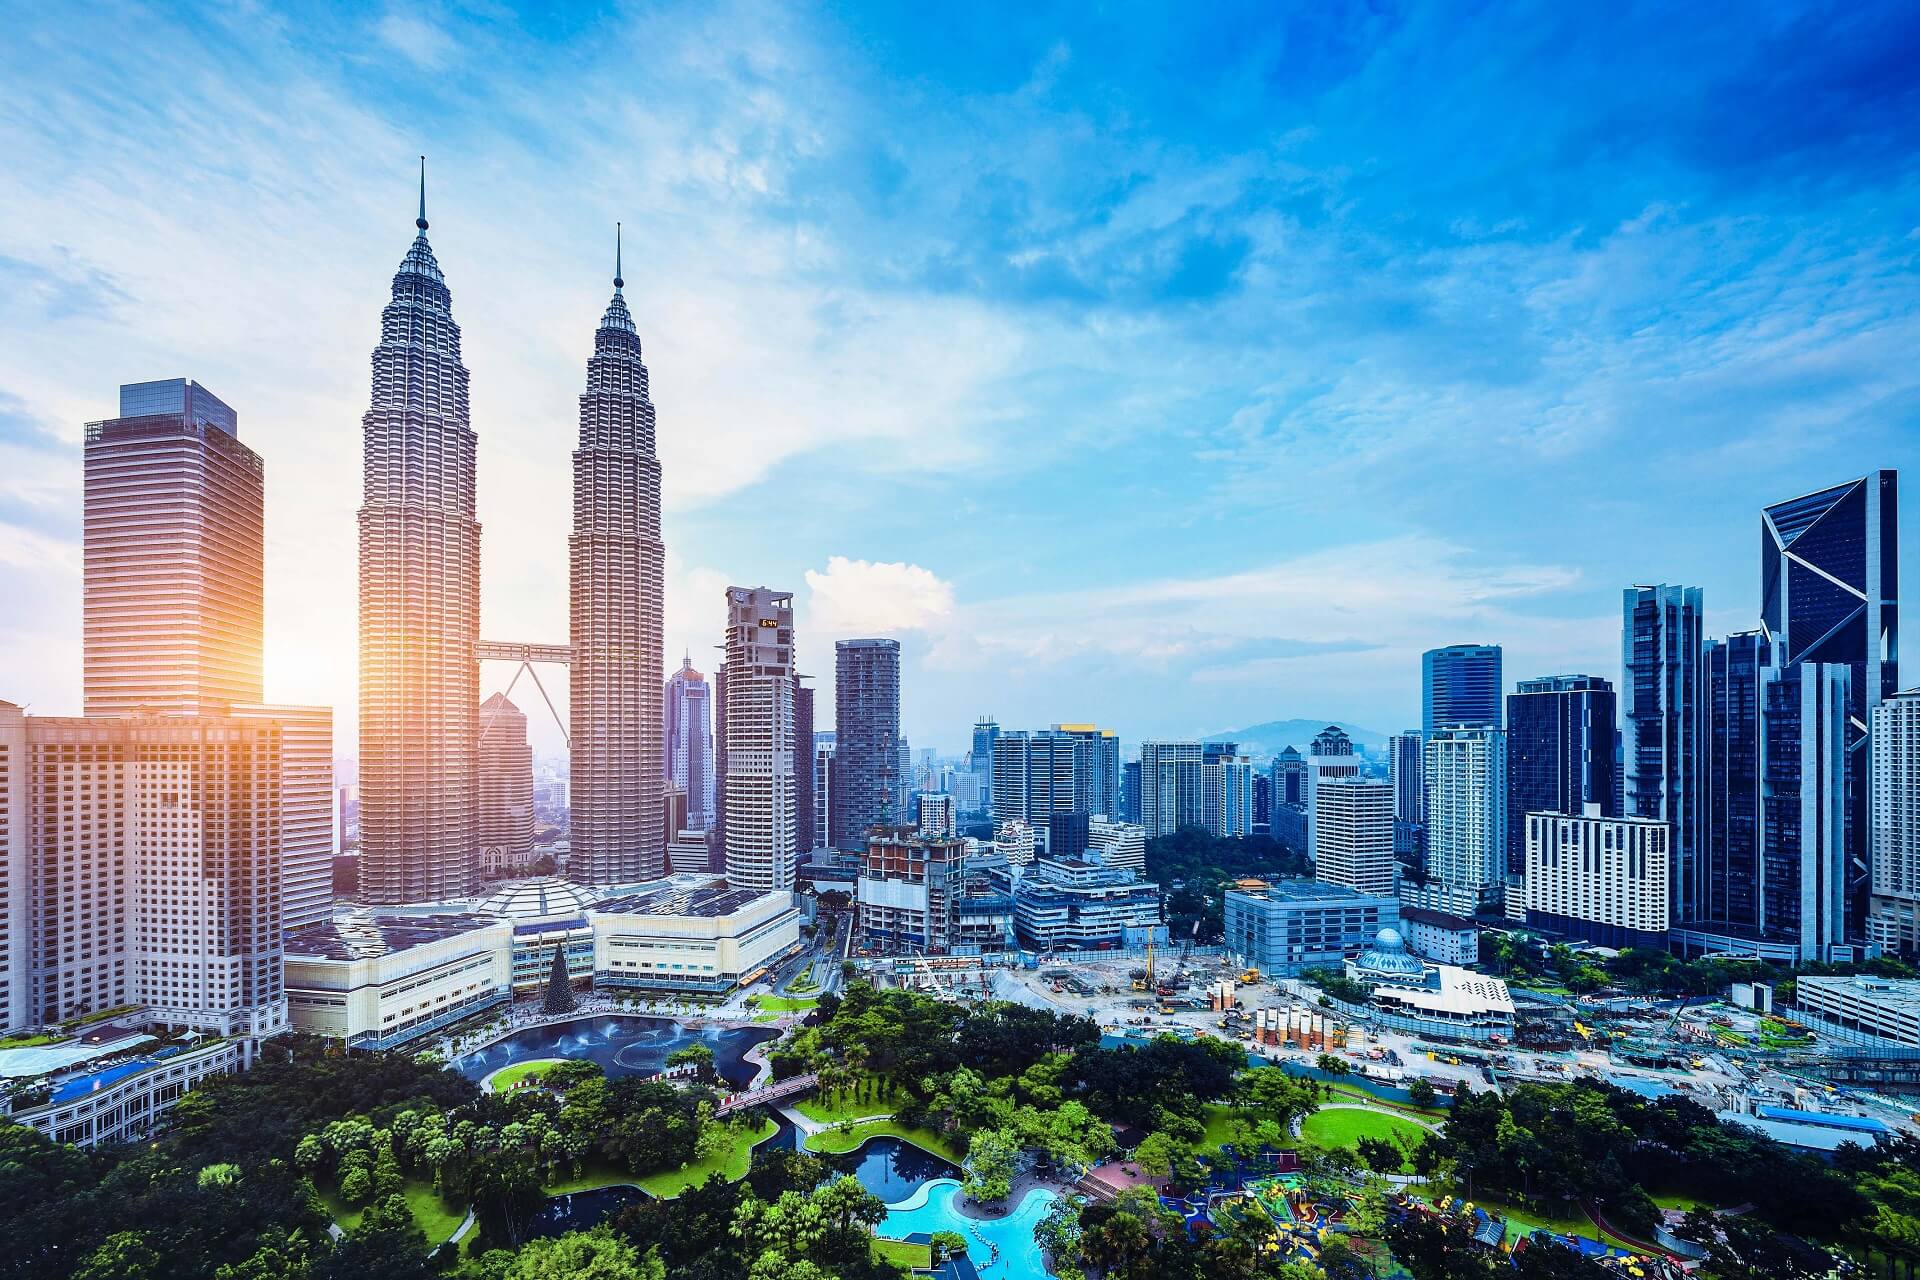 Die Zwillingstürme in Kuala Lumpur sind ein beliebtes Fotomotiv